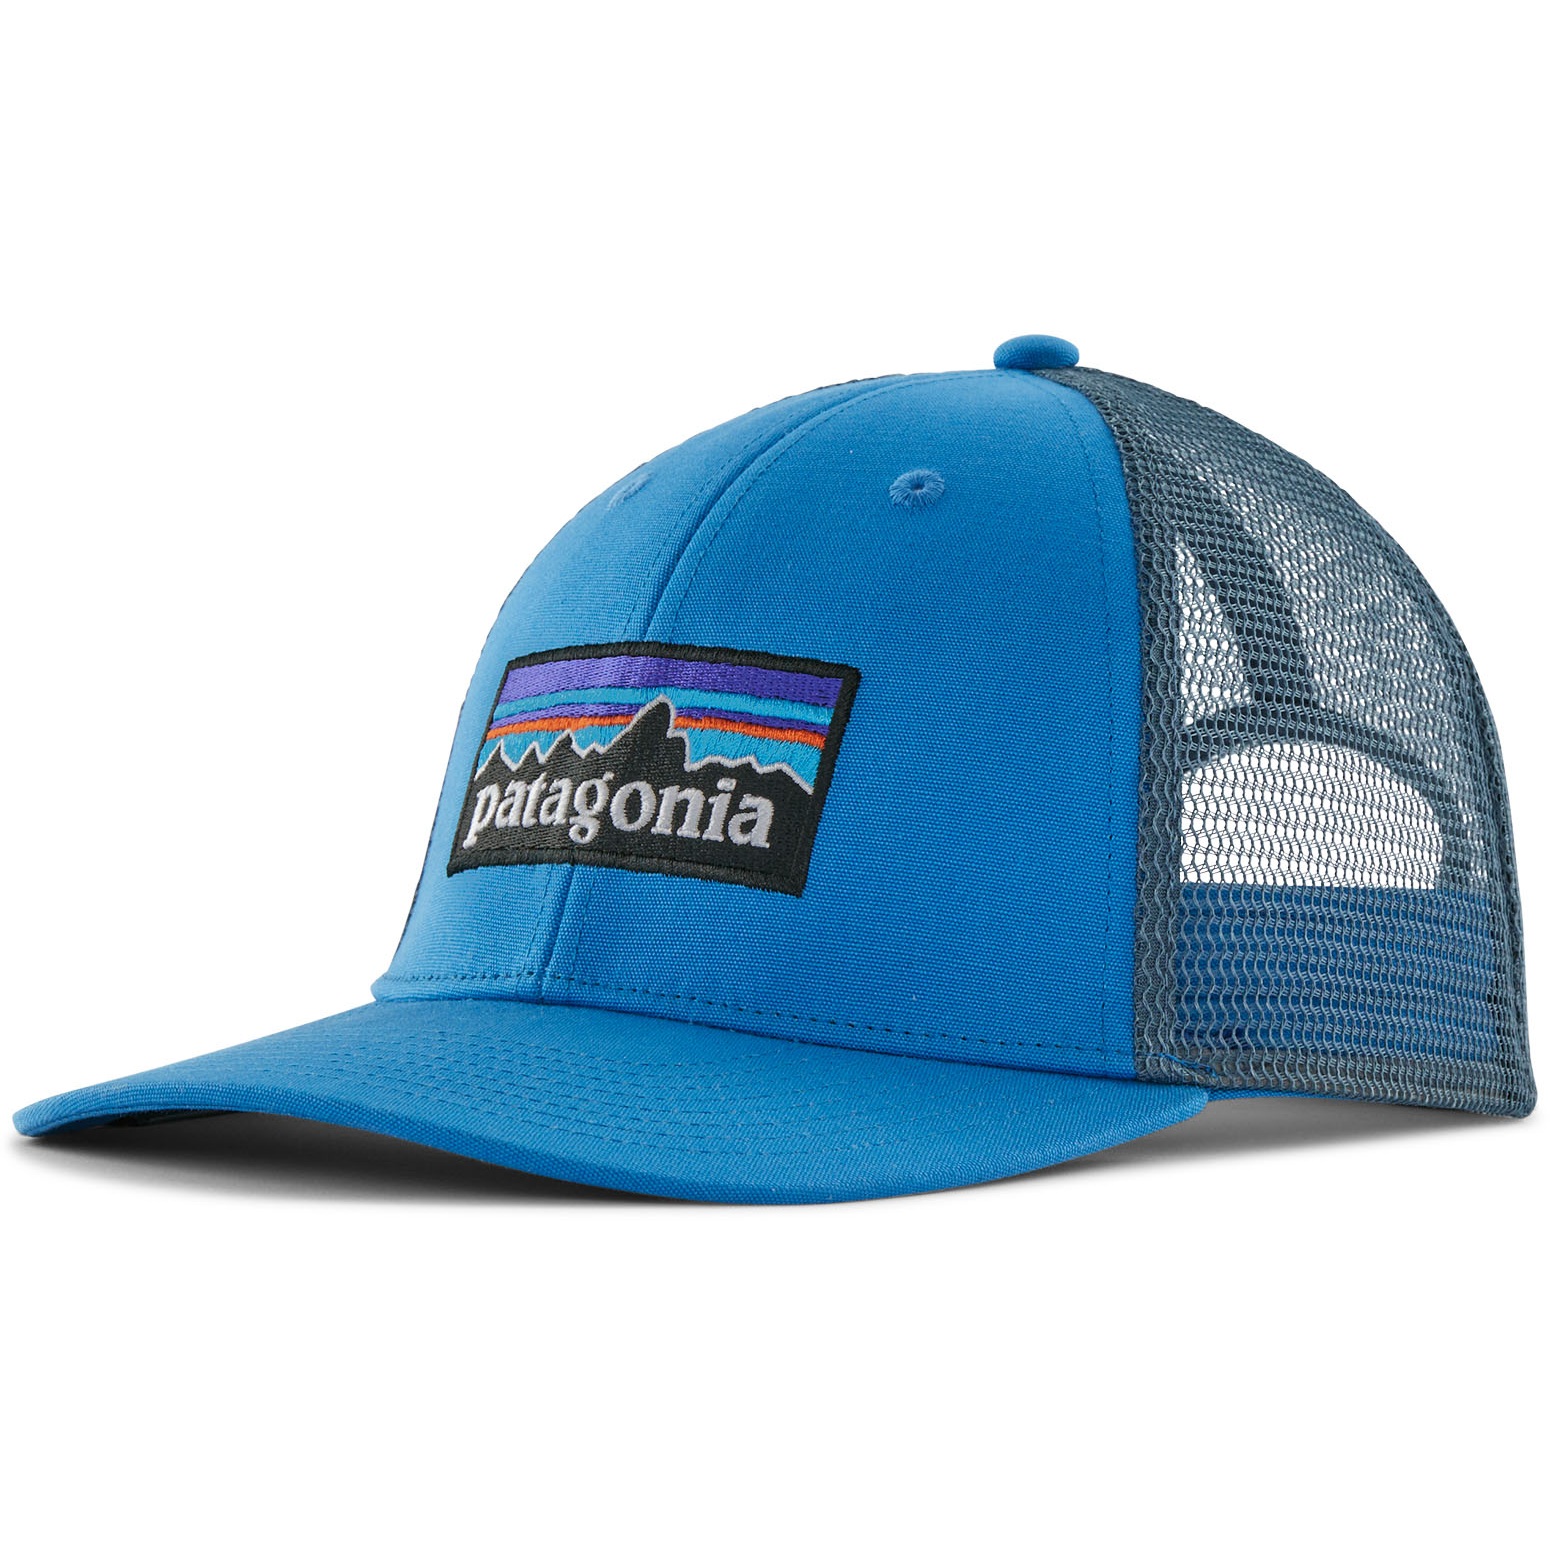 Productfoto van Patagonia P-6 Logo LoPro Trucker Pet - Vessel Blue